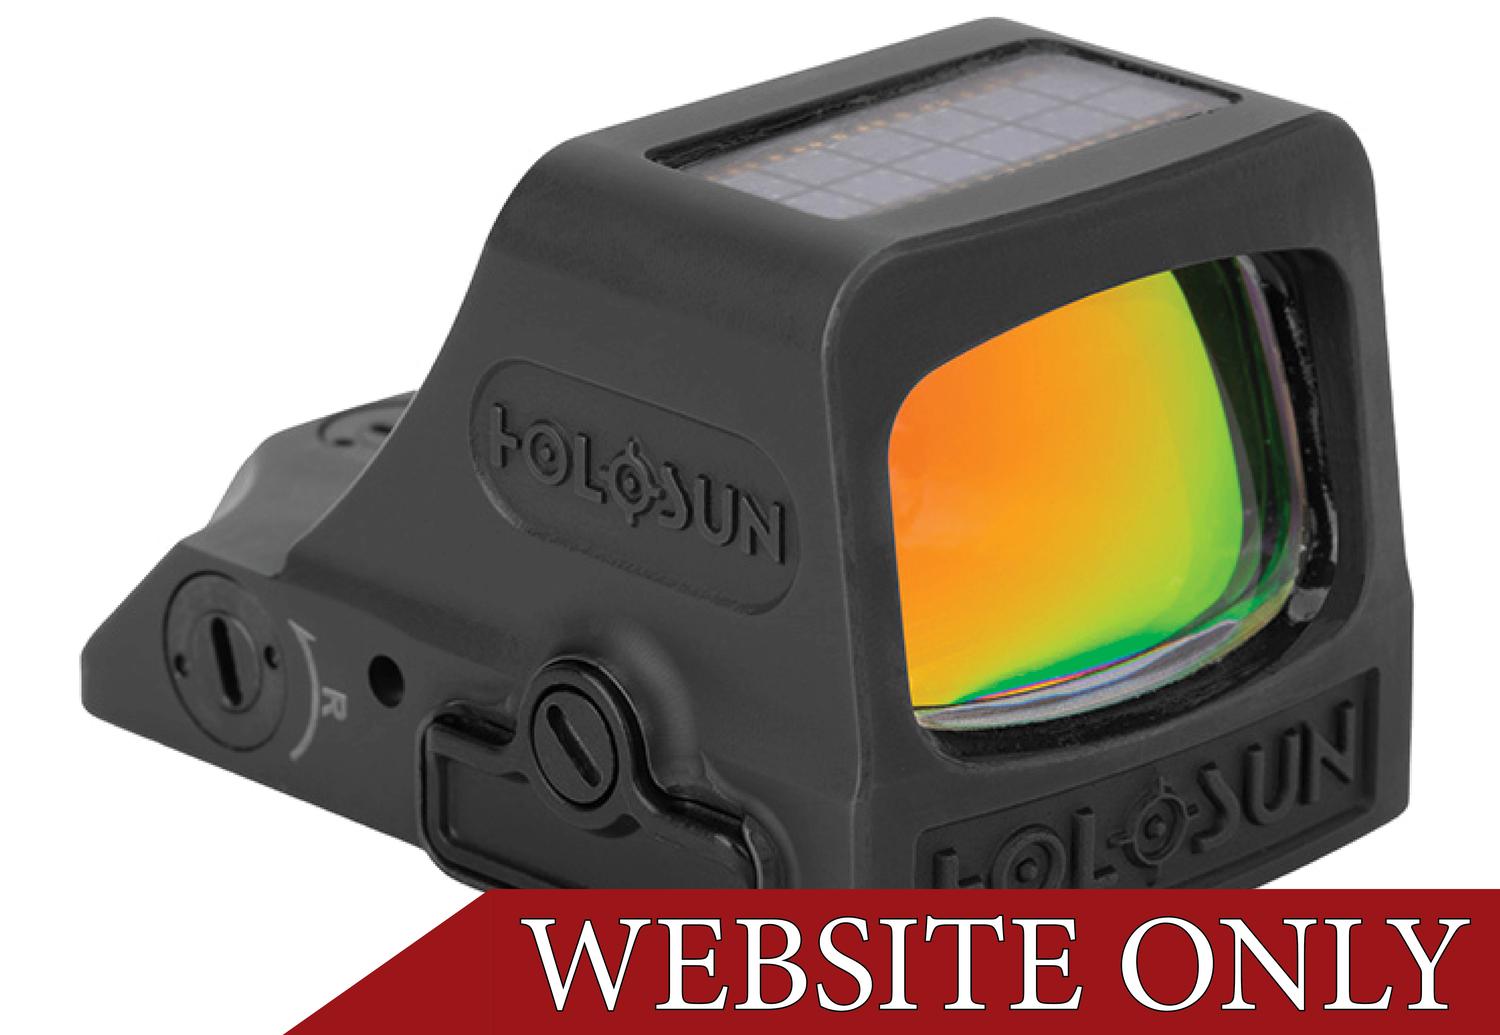  508 Series Pistol Green Dot - Solar/Shake Awake